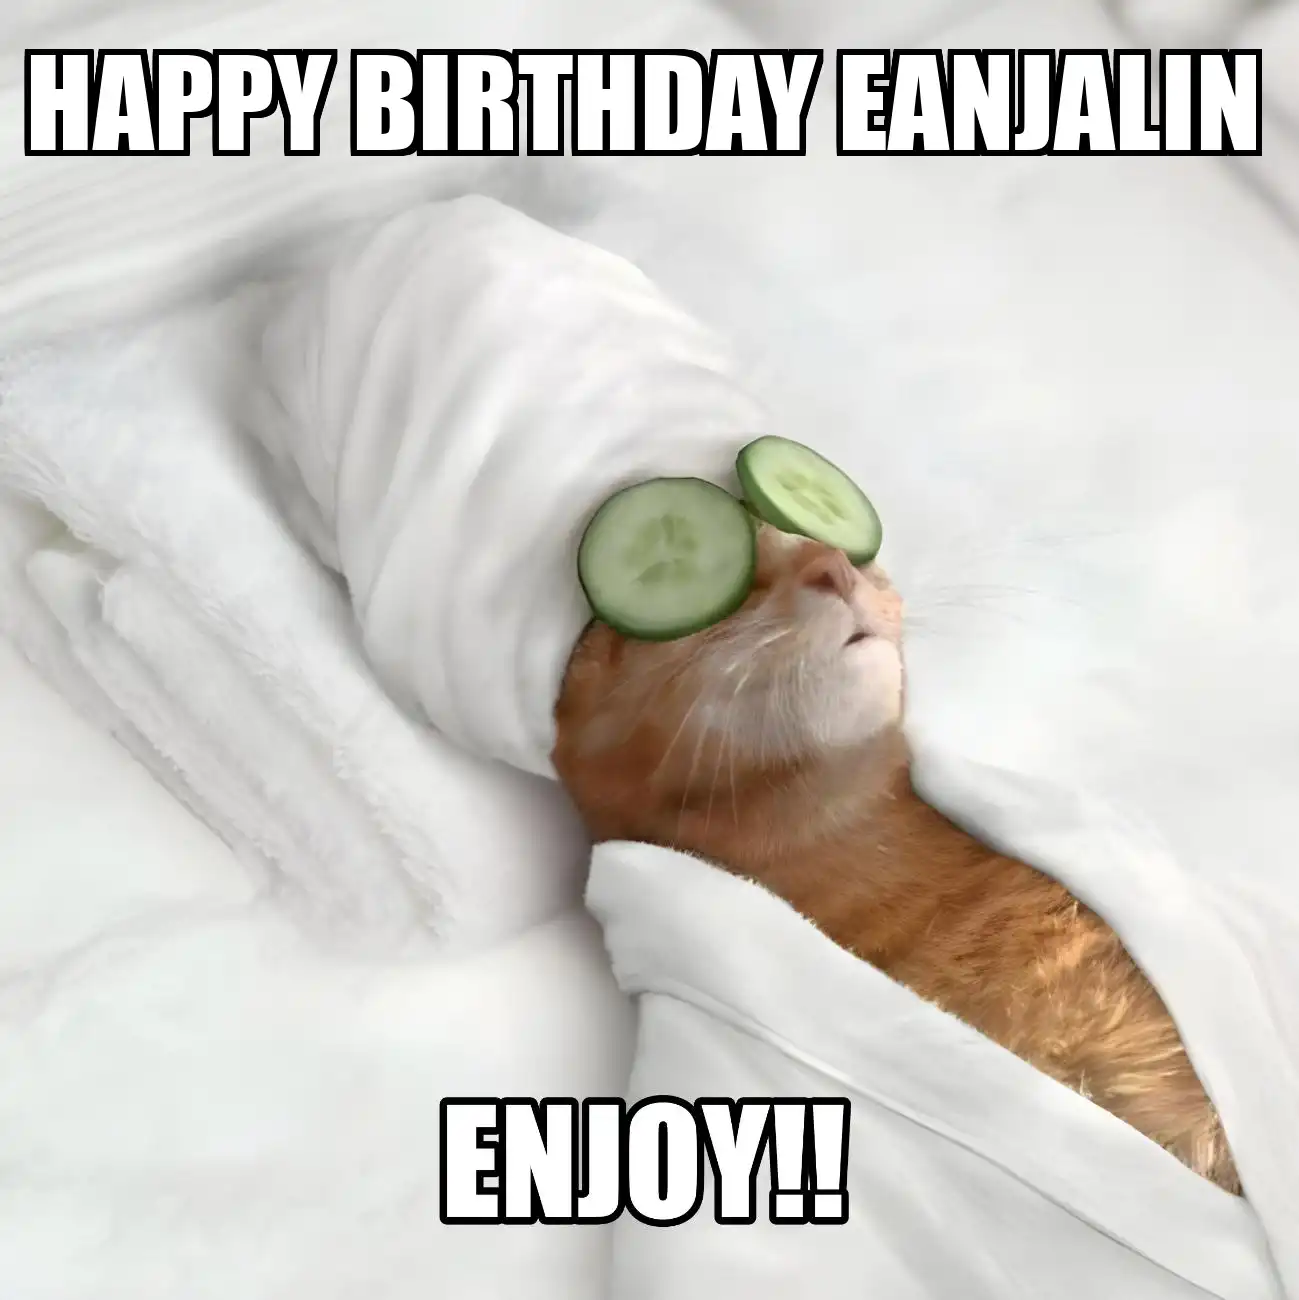 Happy Birthday Eanjalin Enjoy Cat Meme